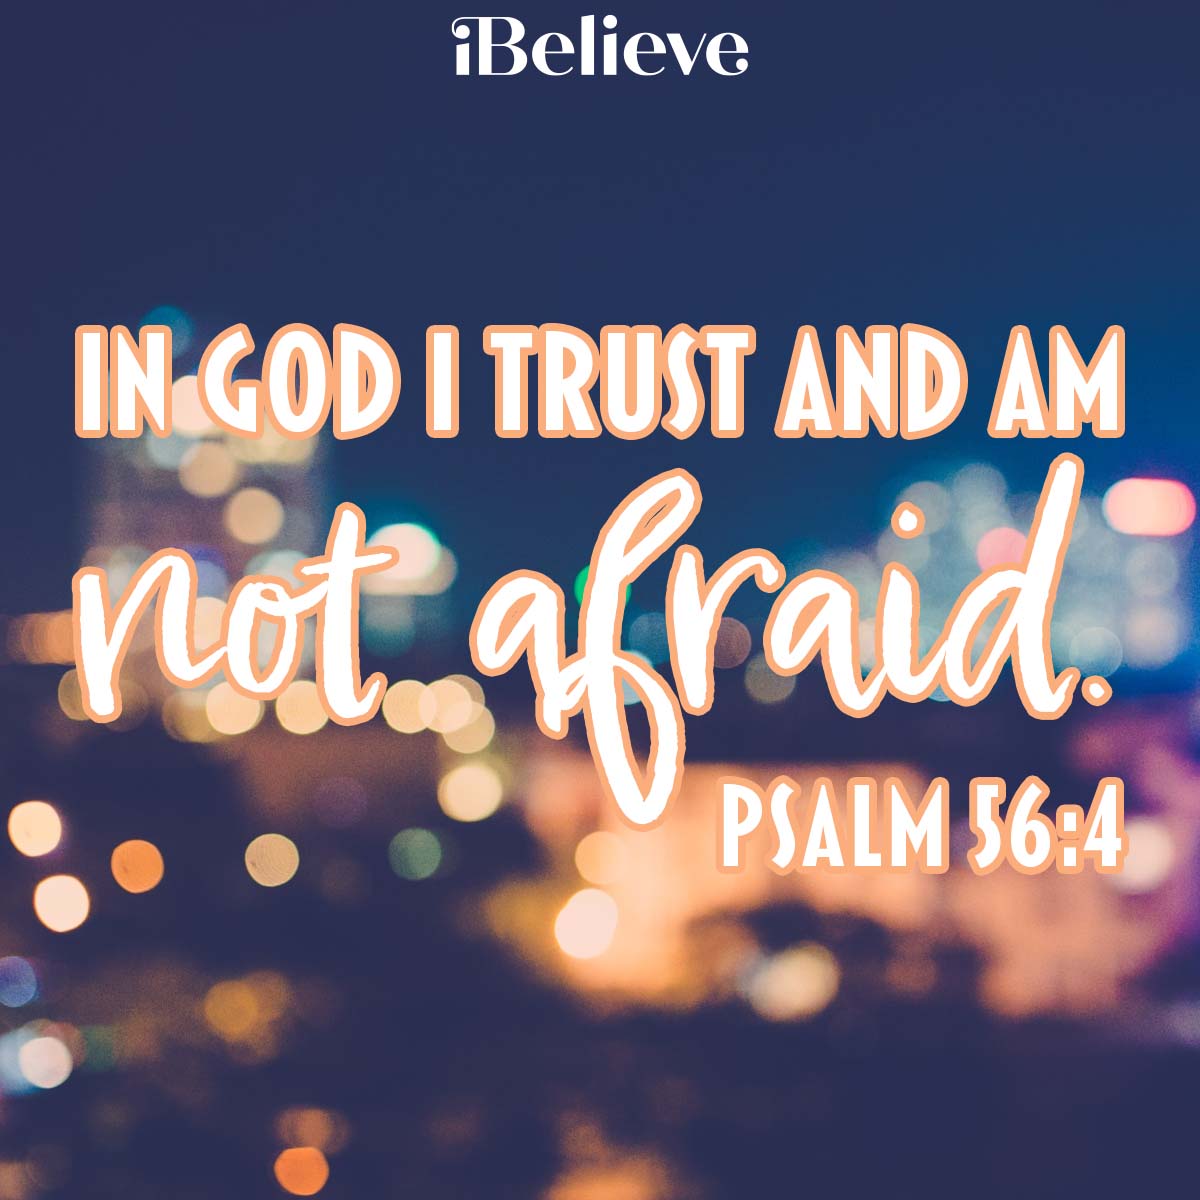 Psalm 36:4, inspirational image